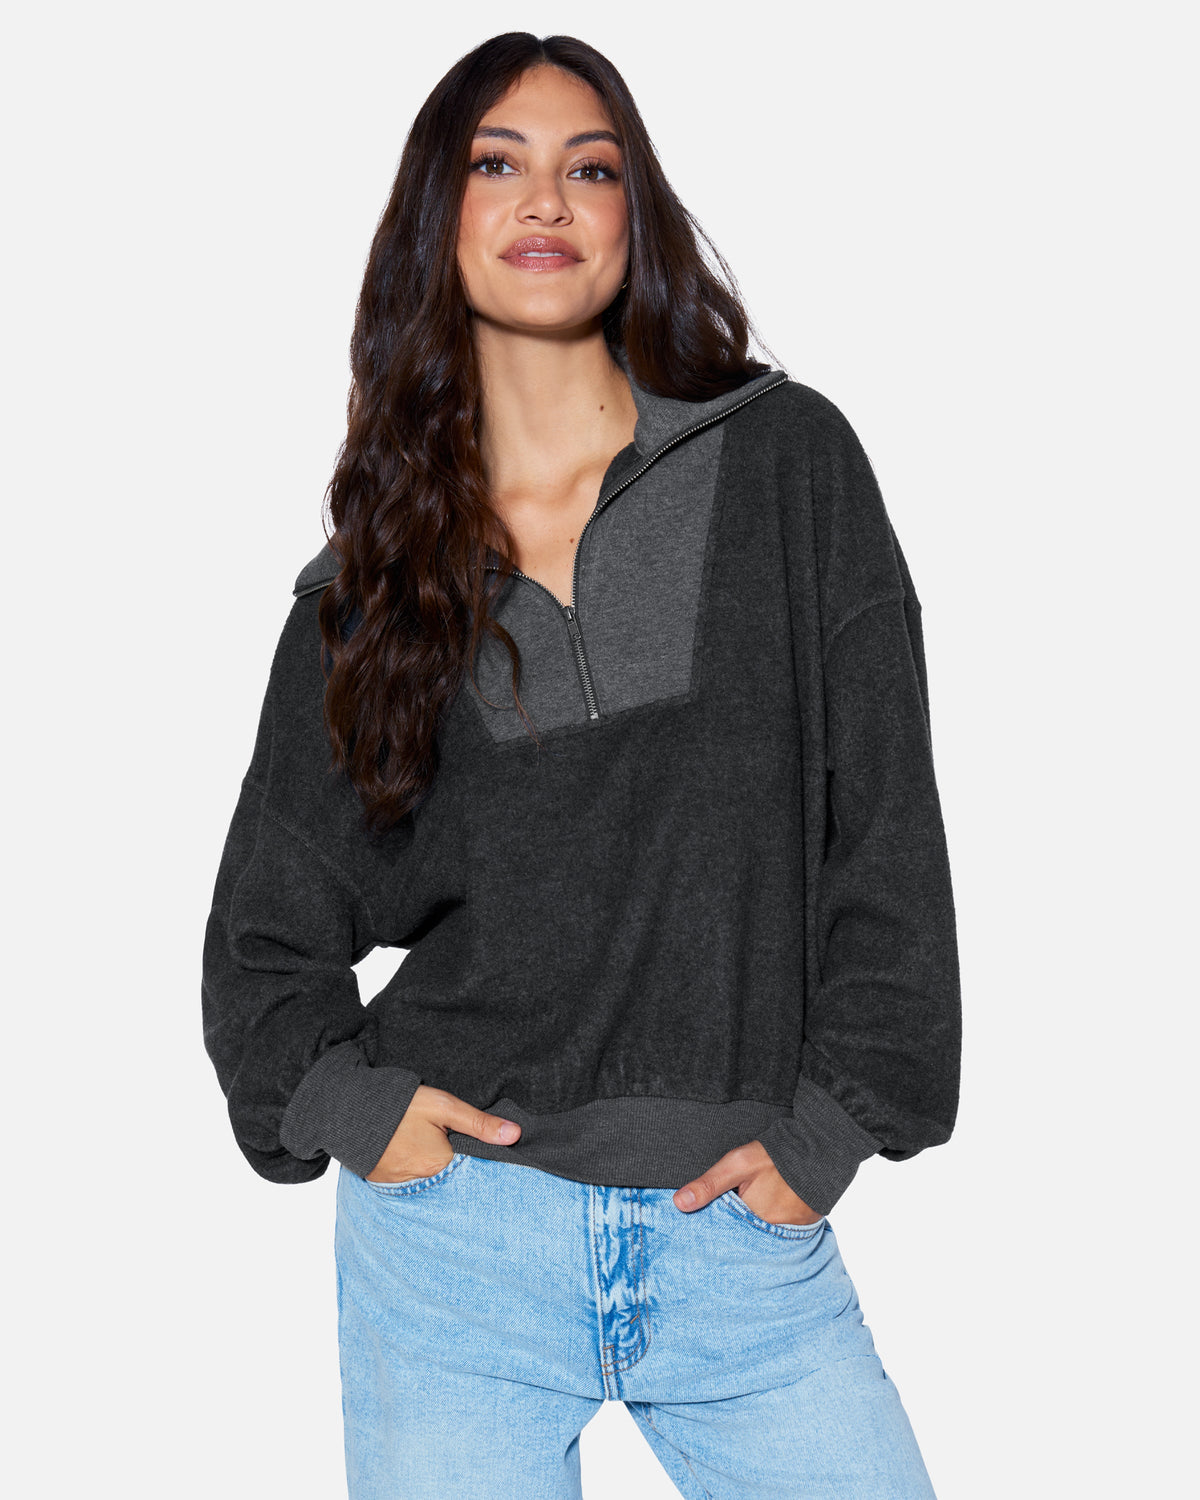 Women's Size XL Hoodies & Sweatshirts